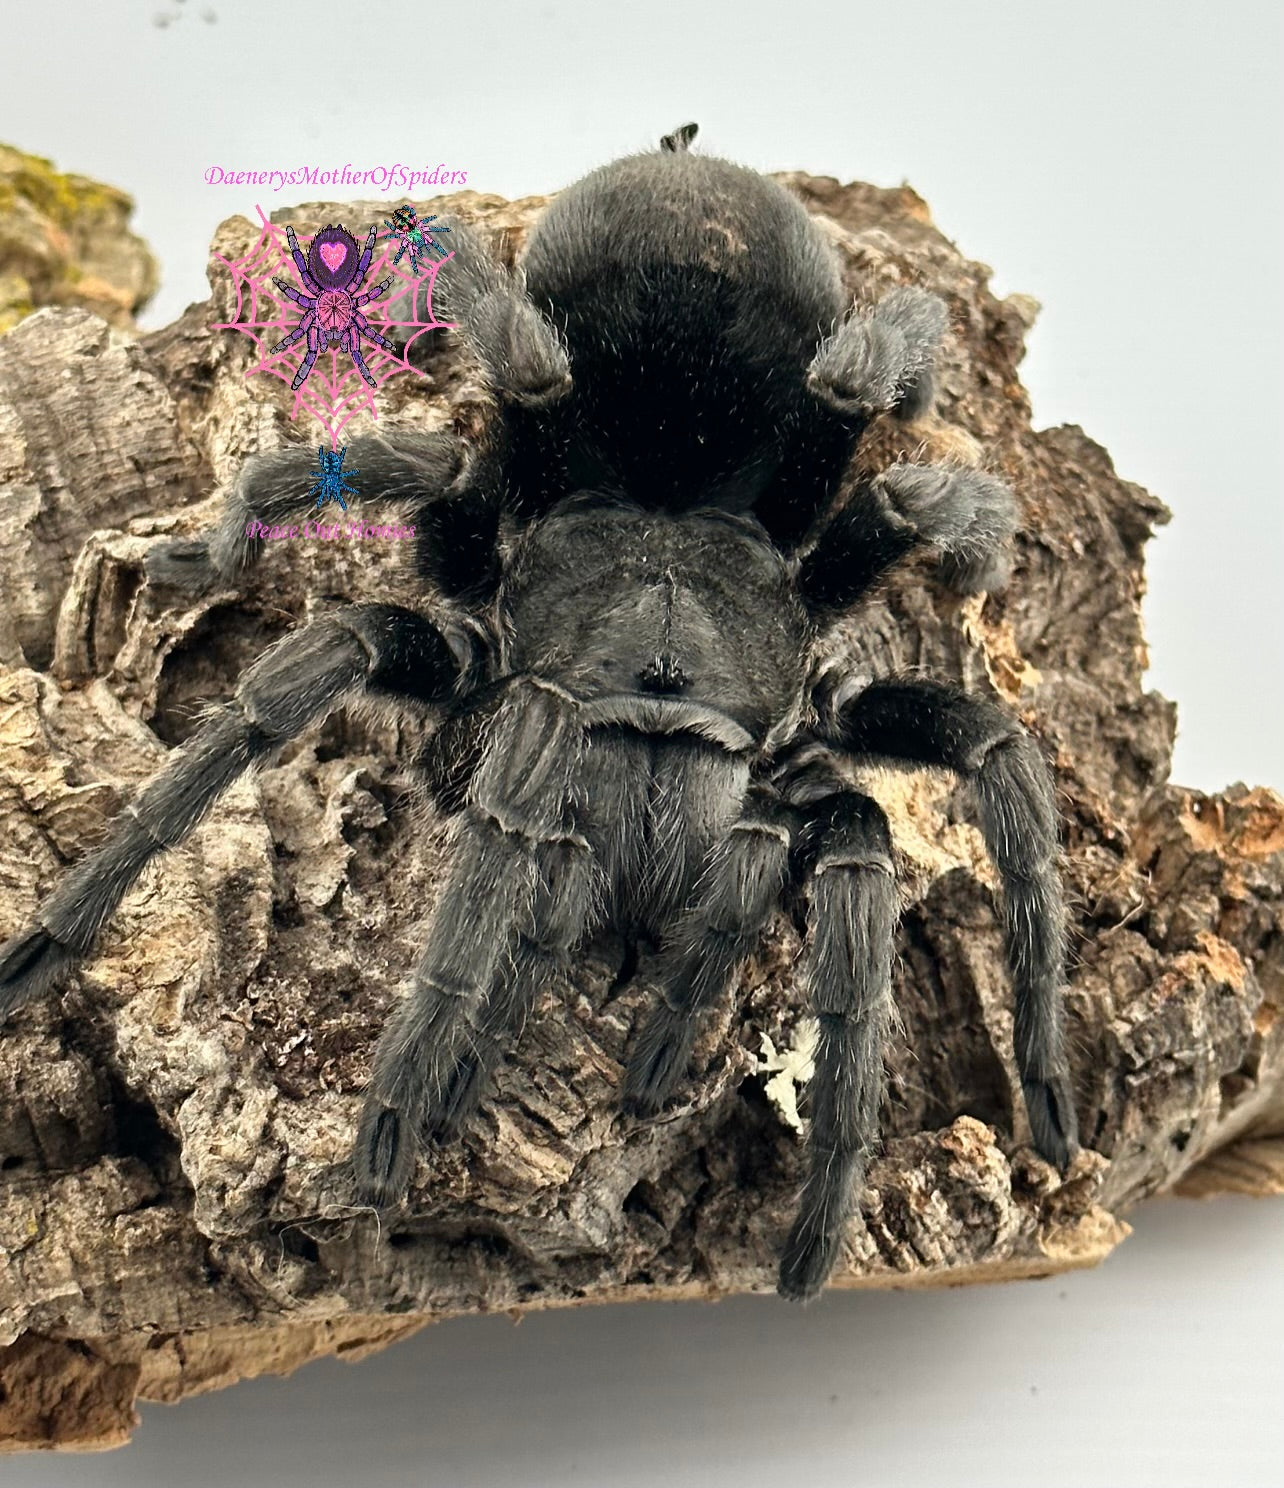 Grammostola Pulchra (Brazilian Black Tarantula)